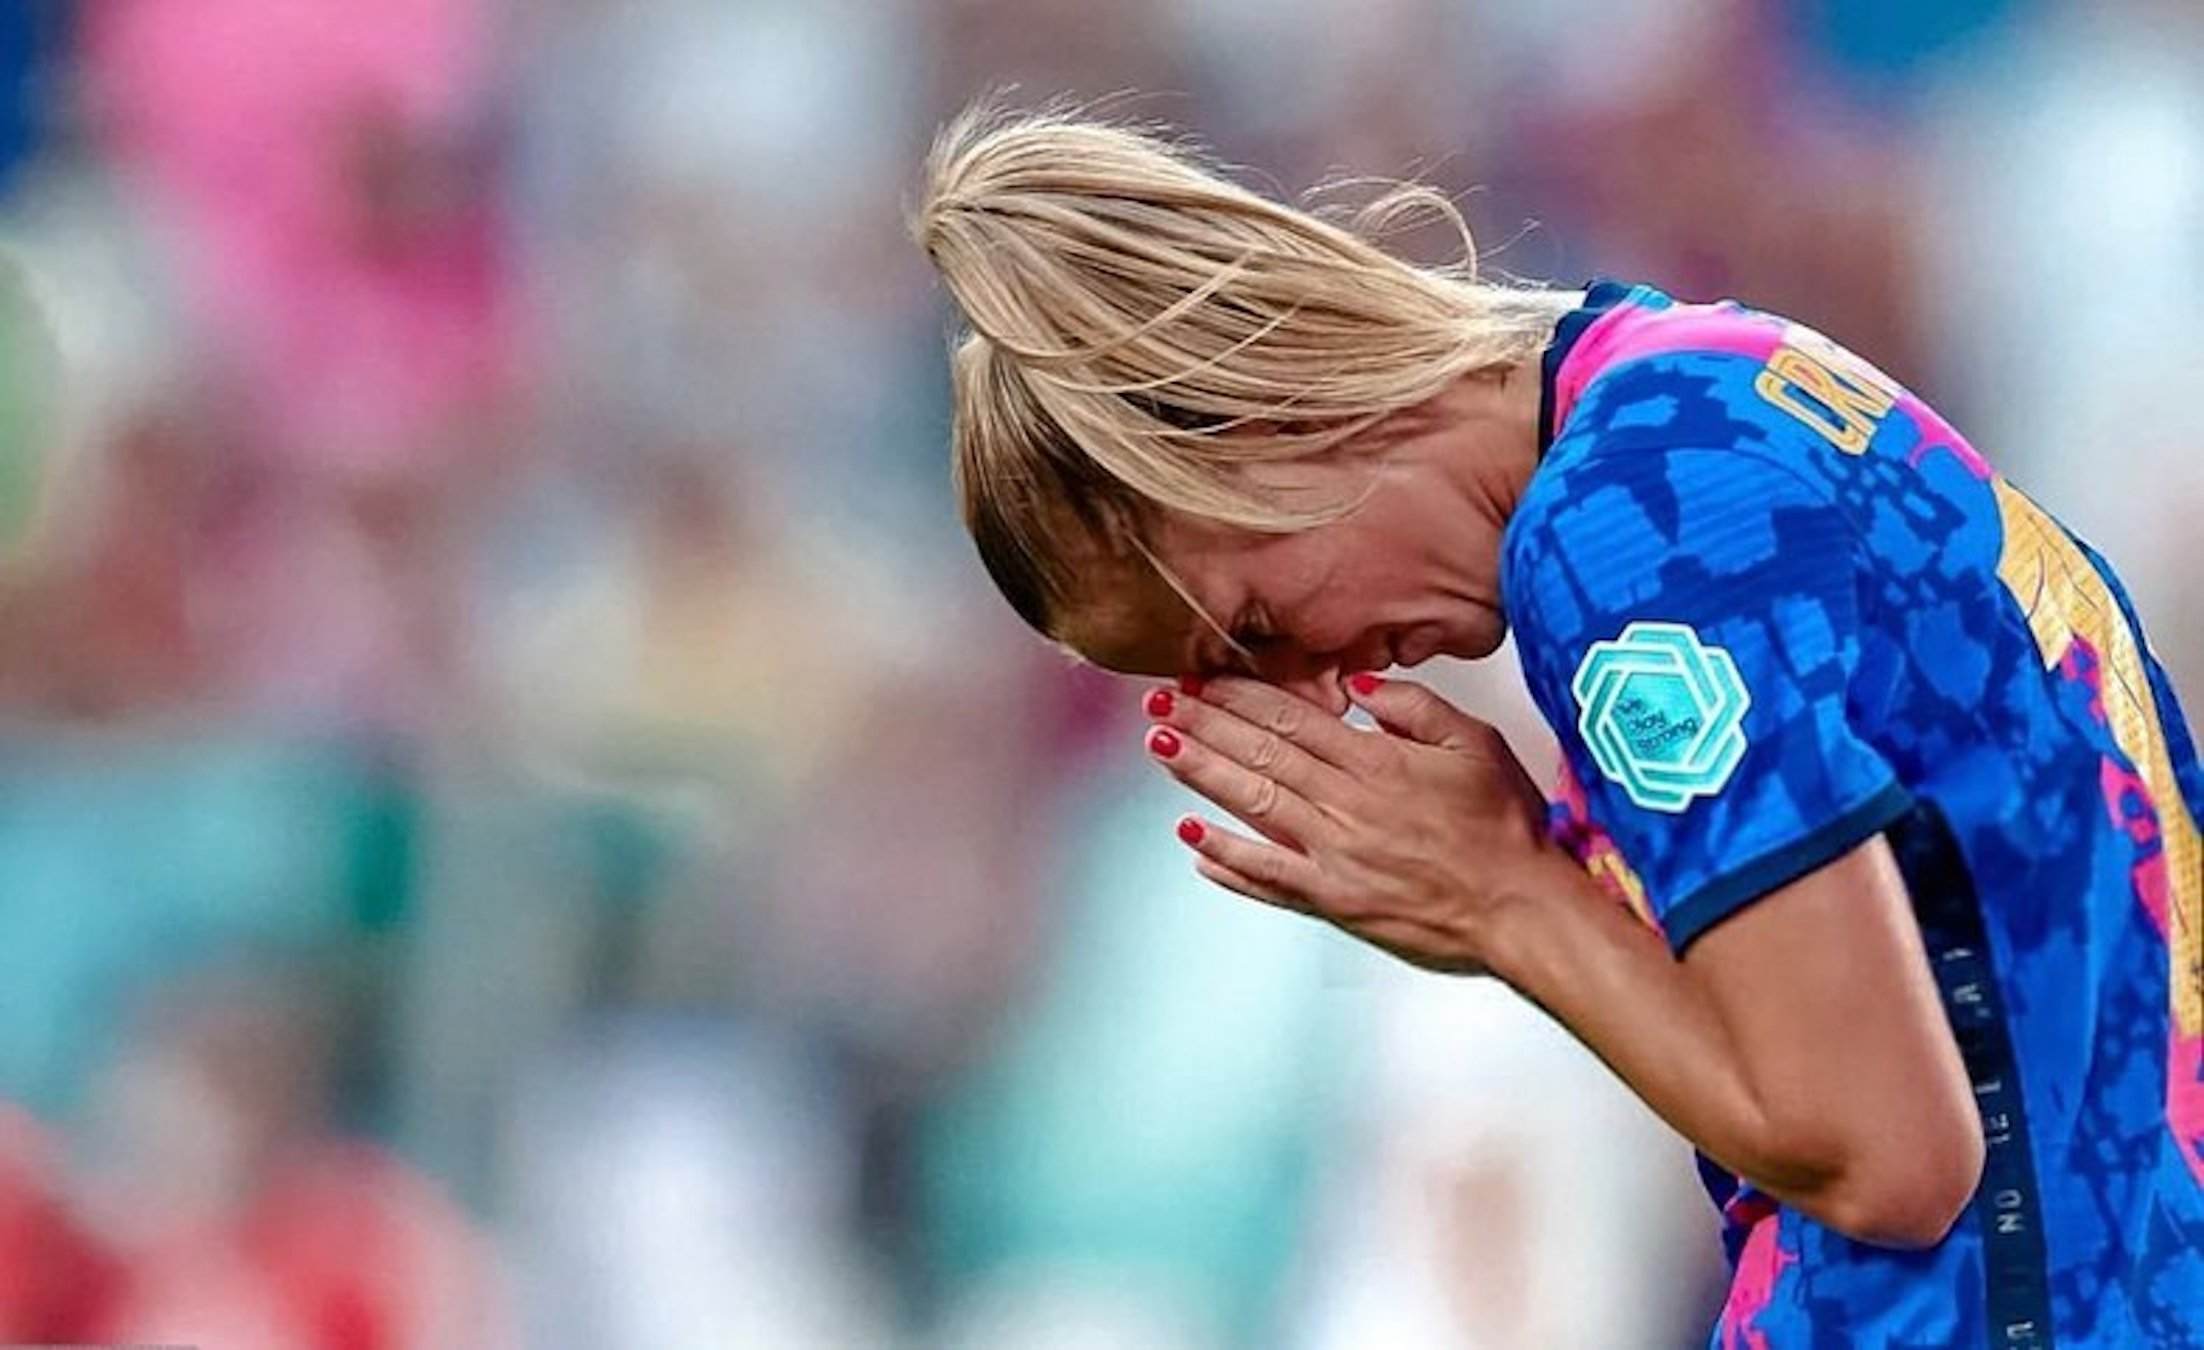 Dolorosísimo adiós al Barça, la suiza más catalana se va, Ana Maria: "Os amo"